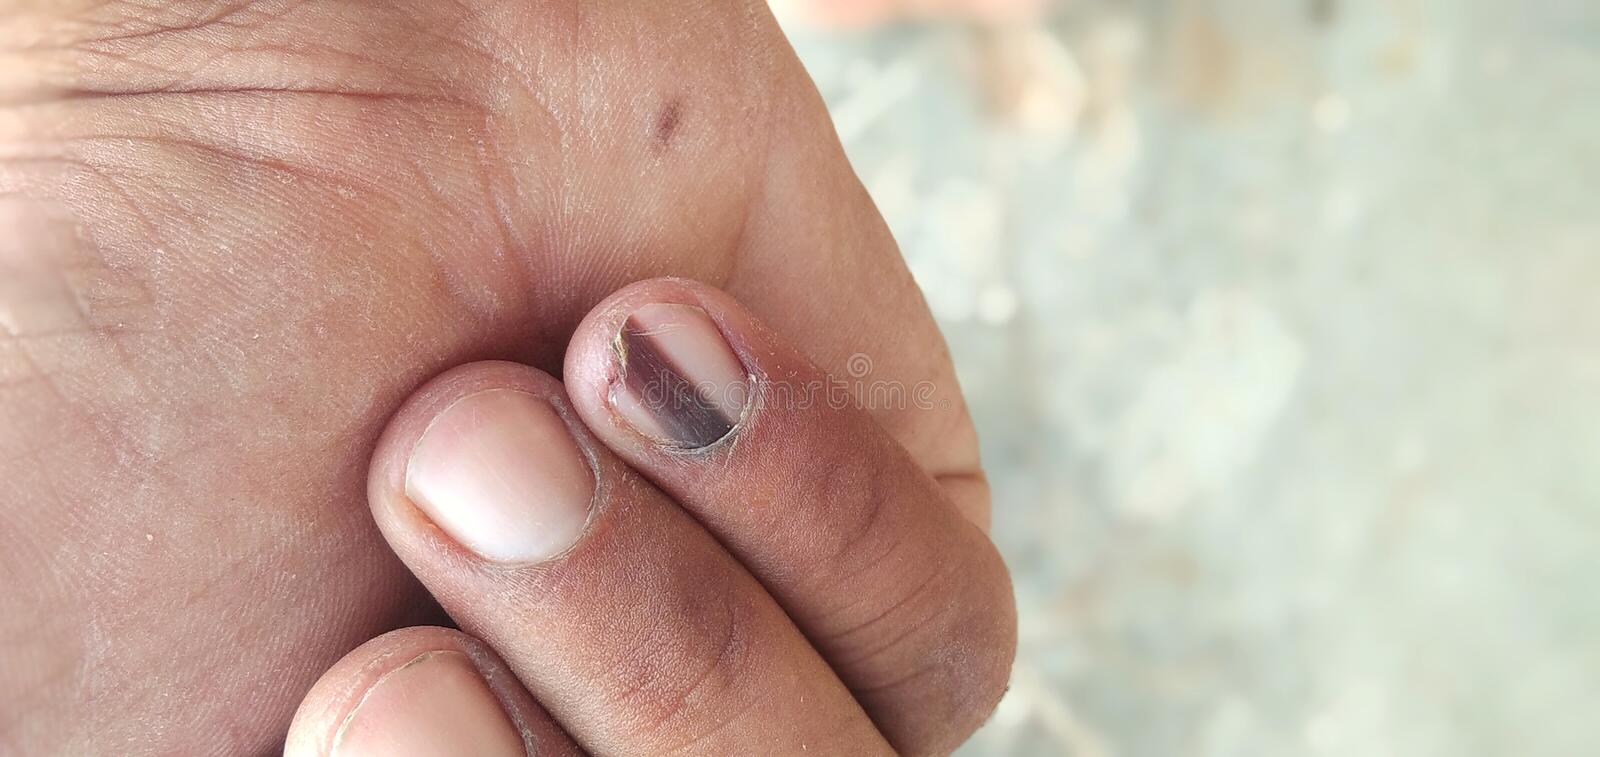 melanoma skin cancer in the nails